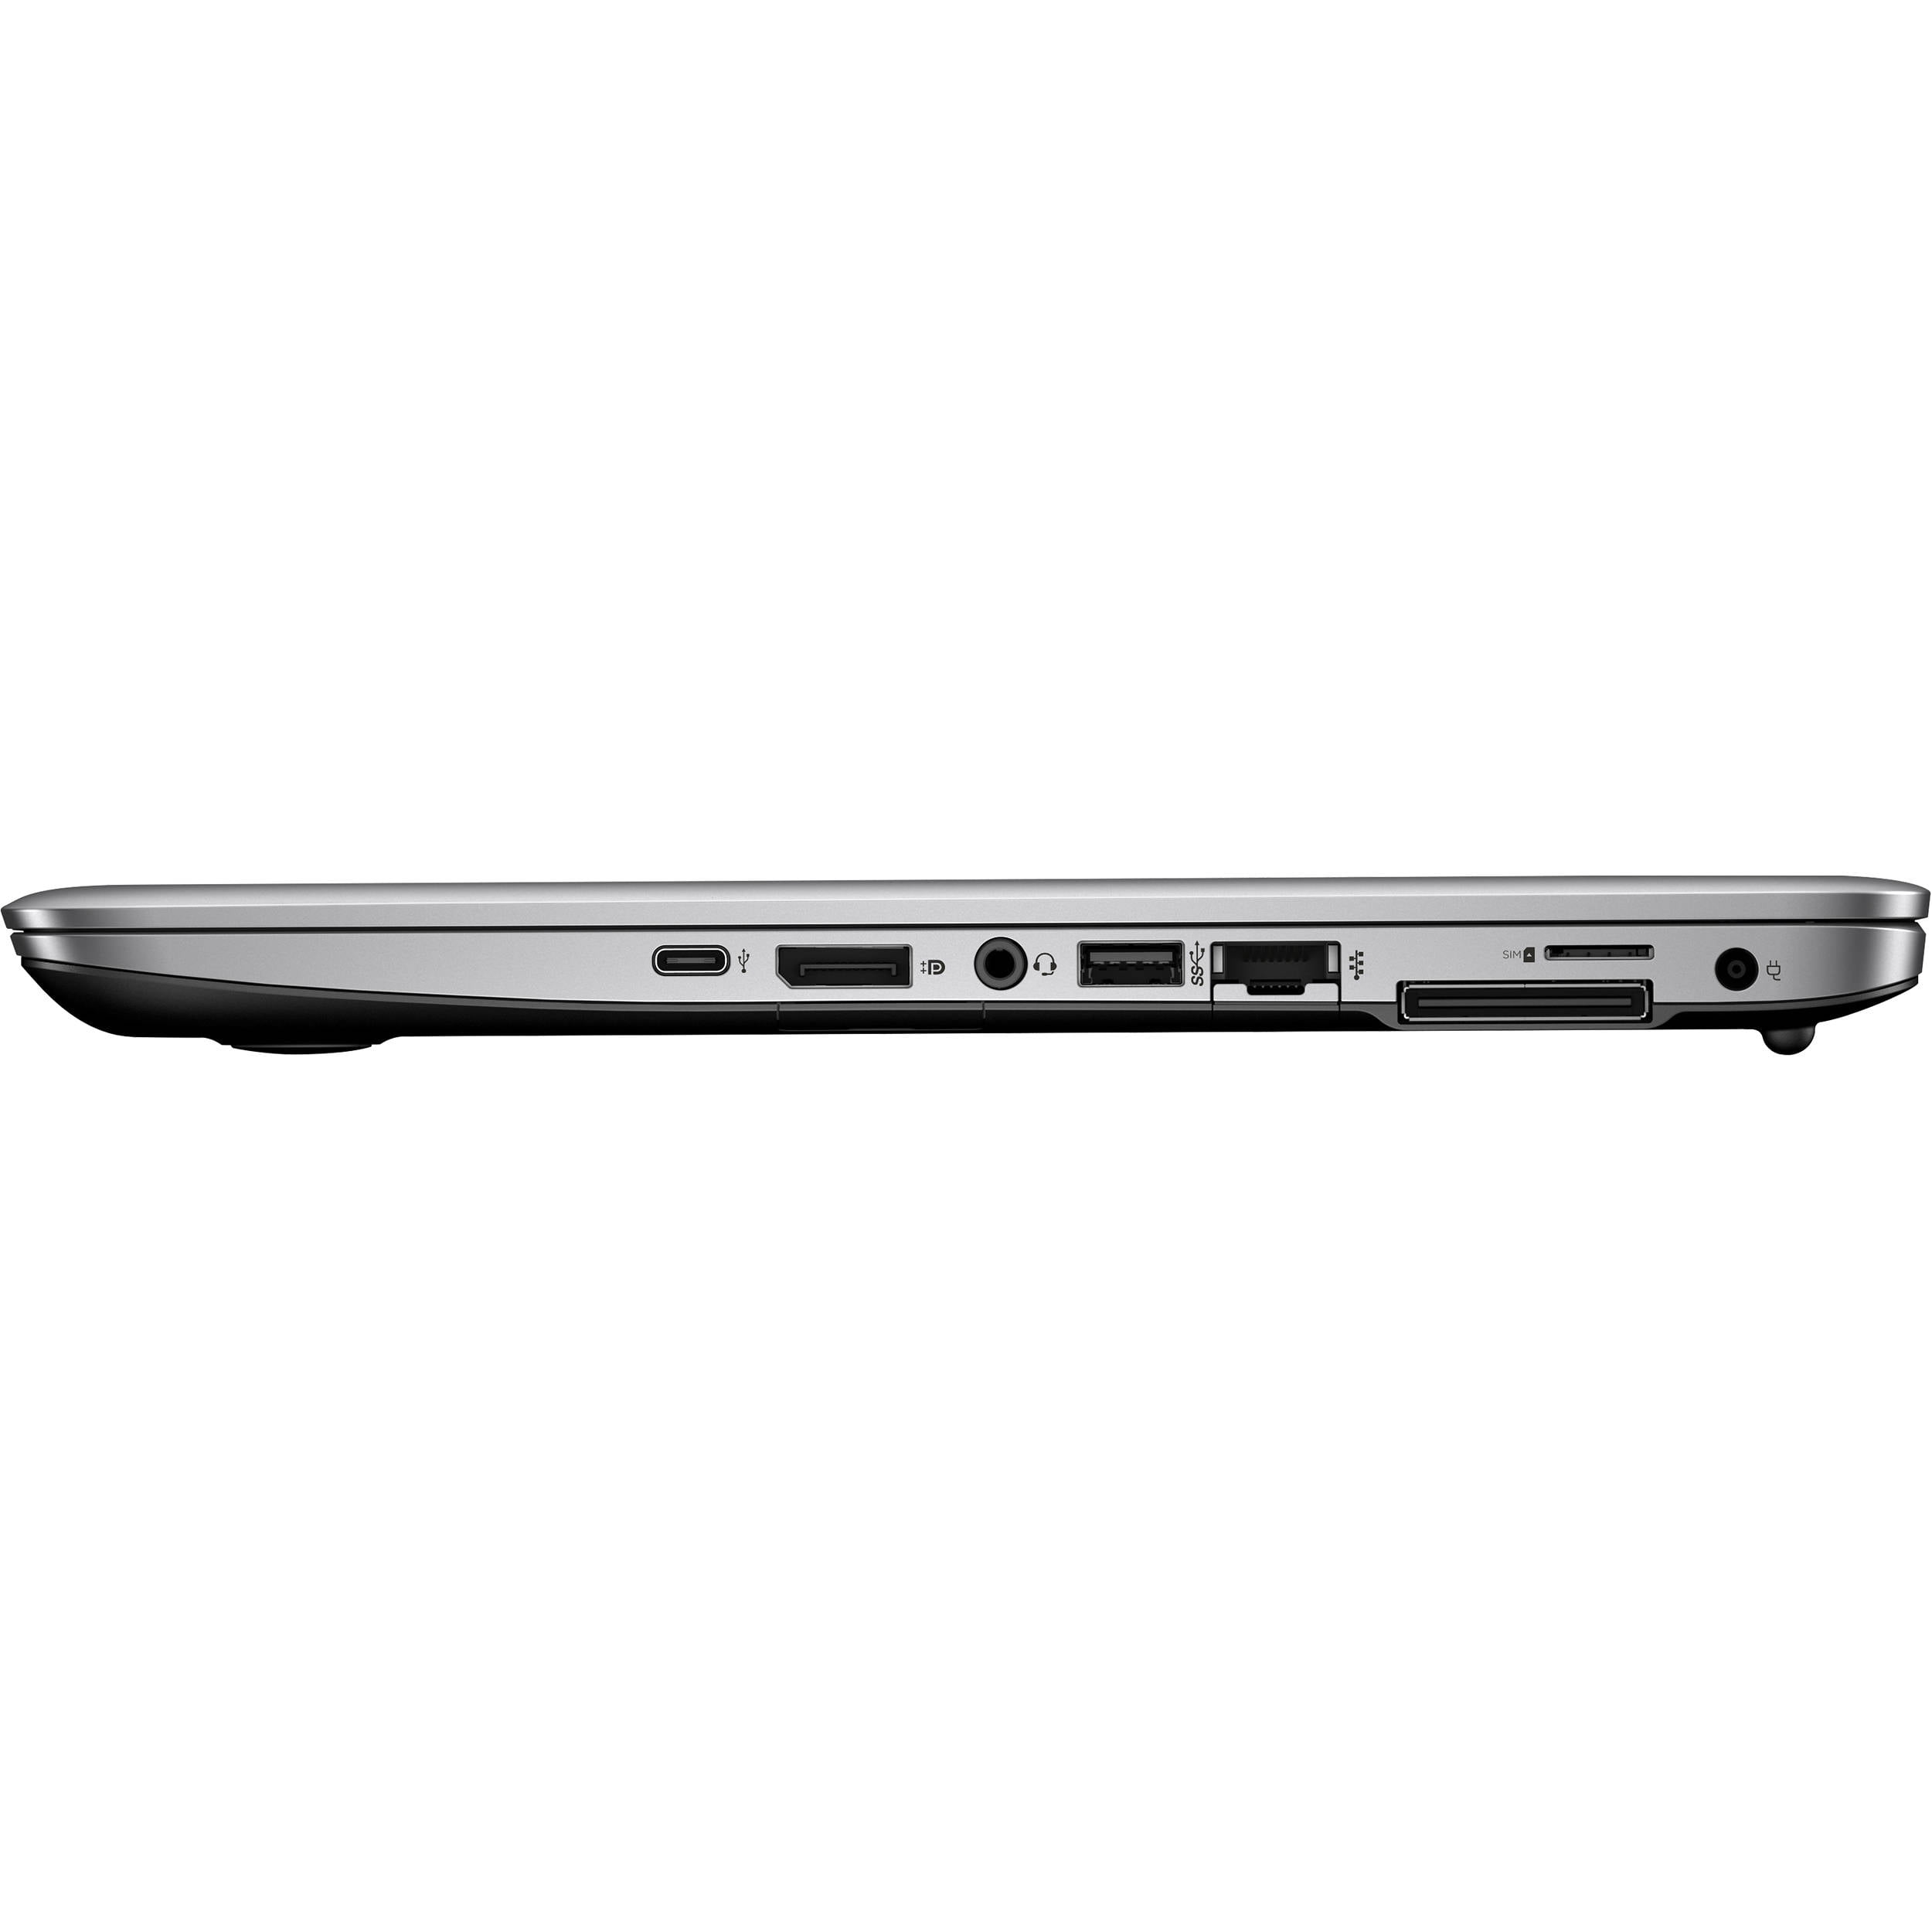 840 G3 HP Elitebook Laptop at Rs 16000